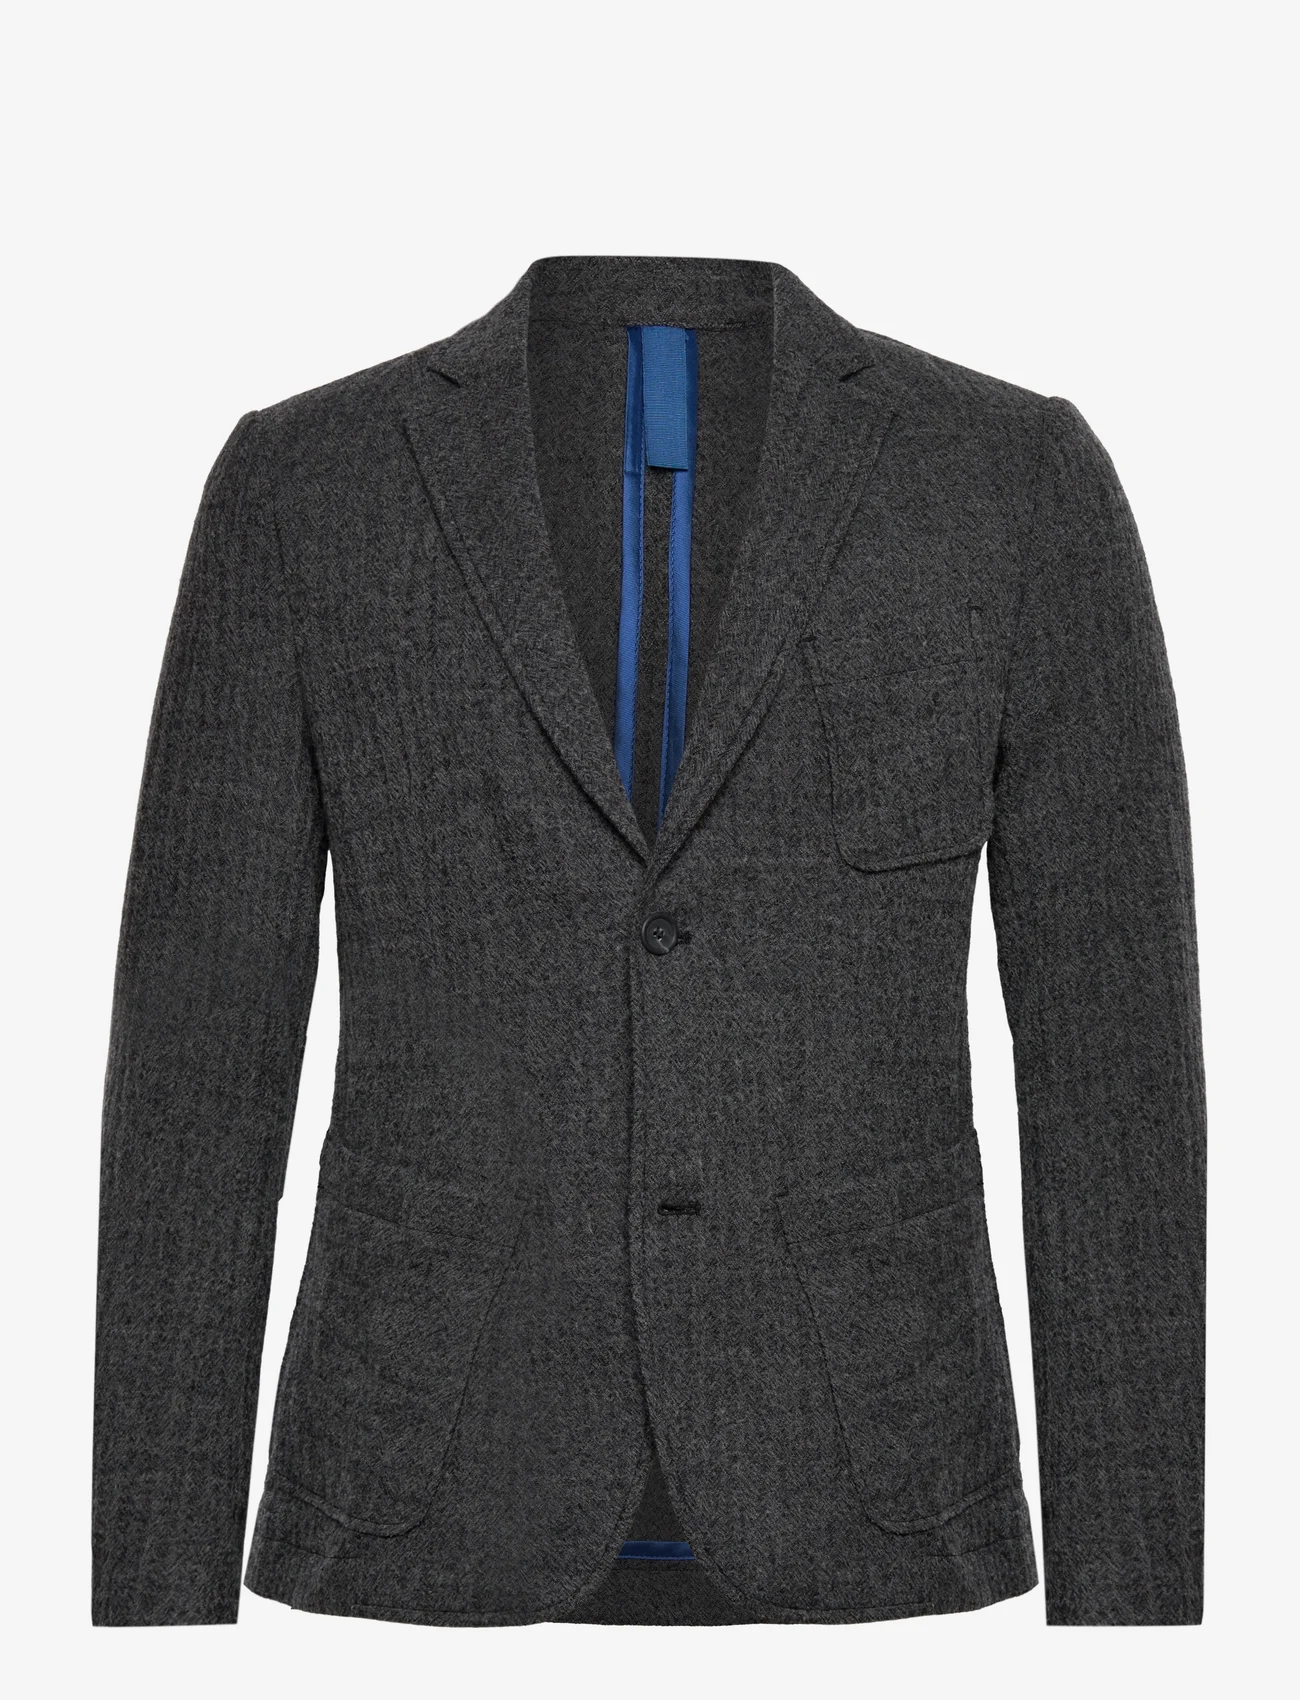 FRENN - Jere Wool Jacket - Žaketes ar divrindu pogājumu - grey - 0